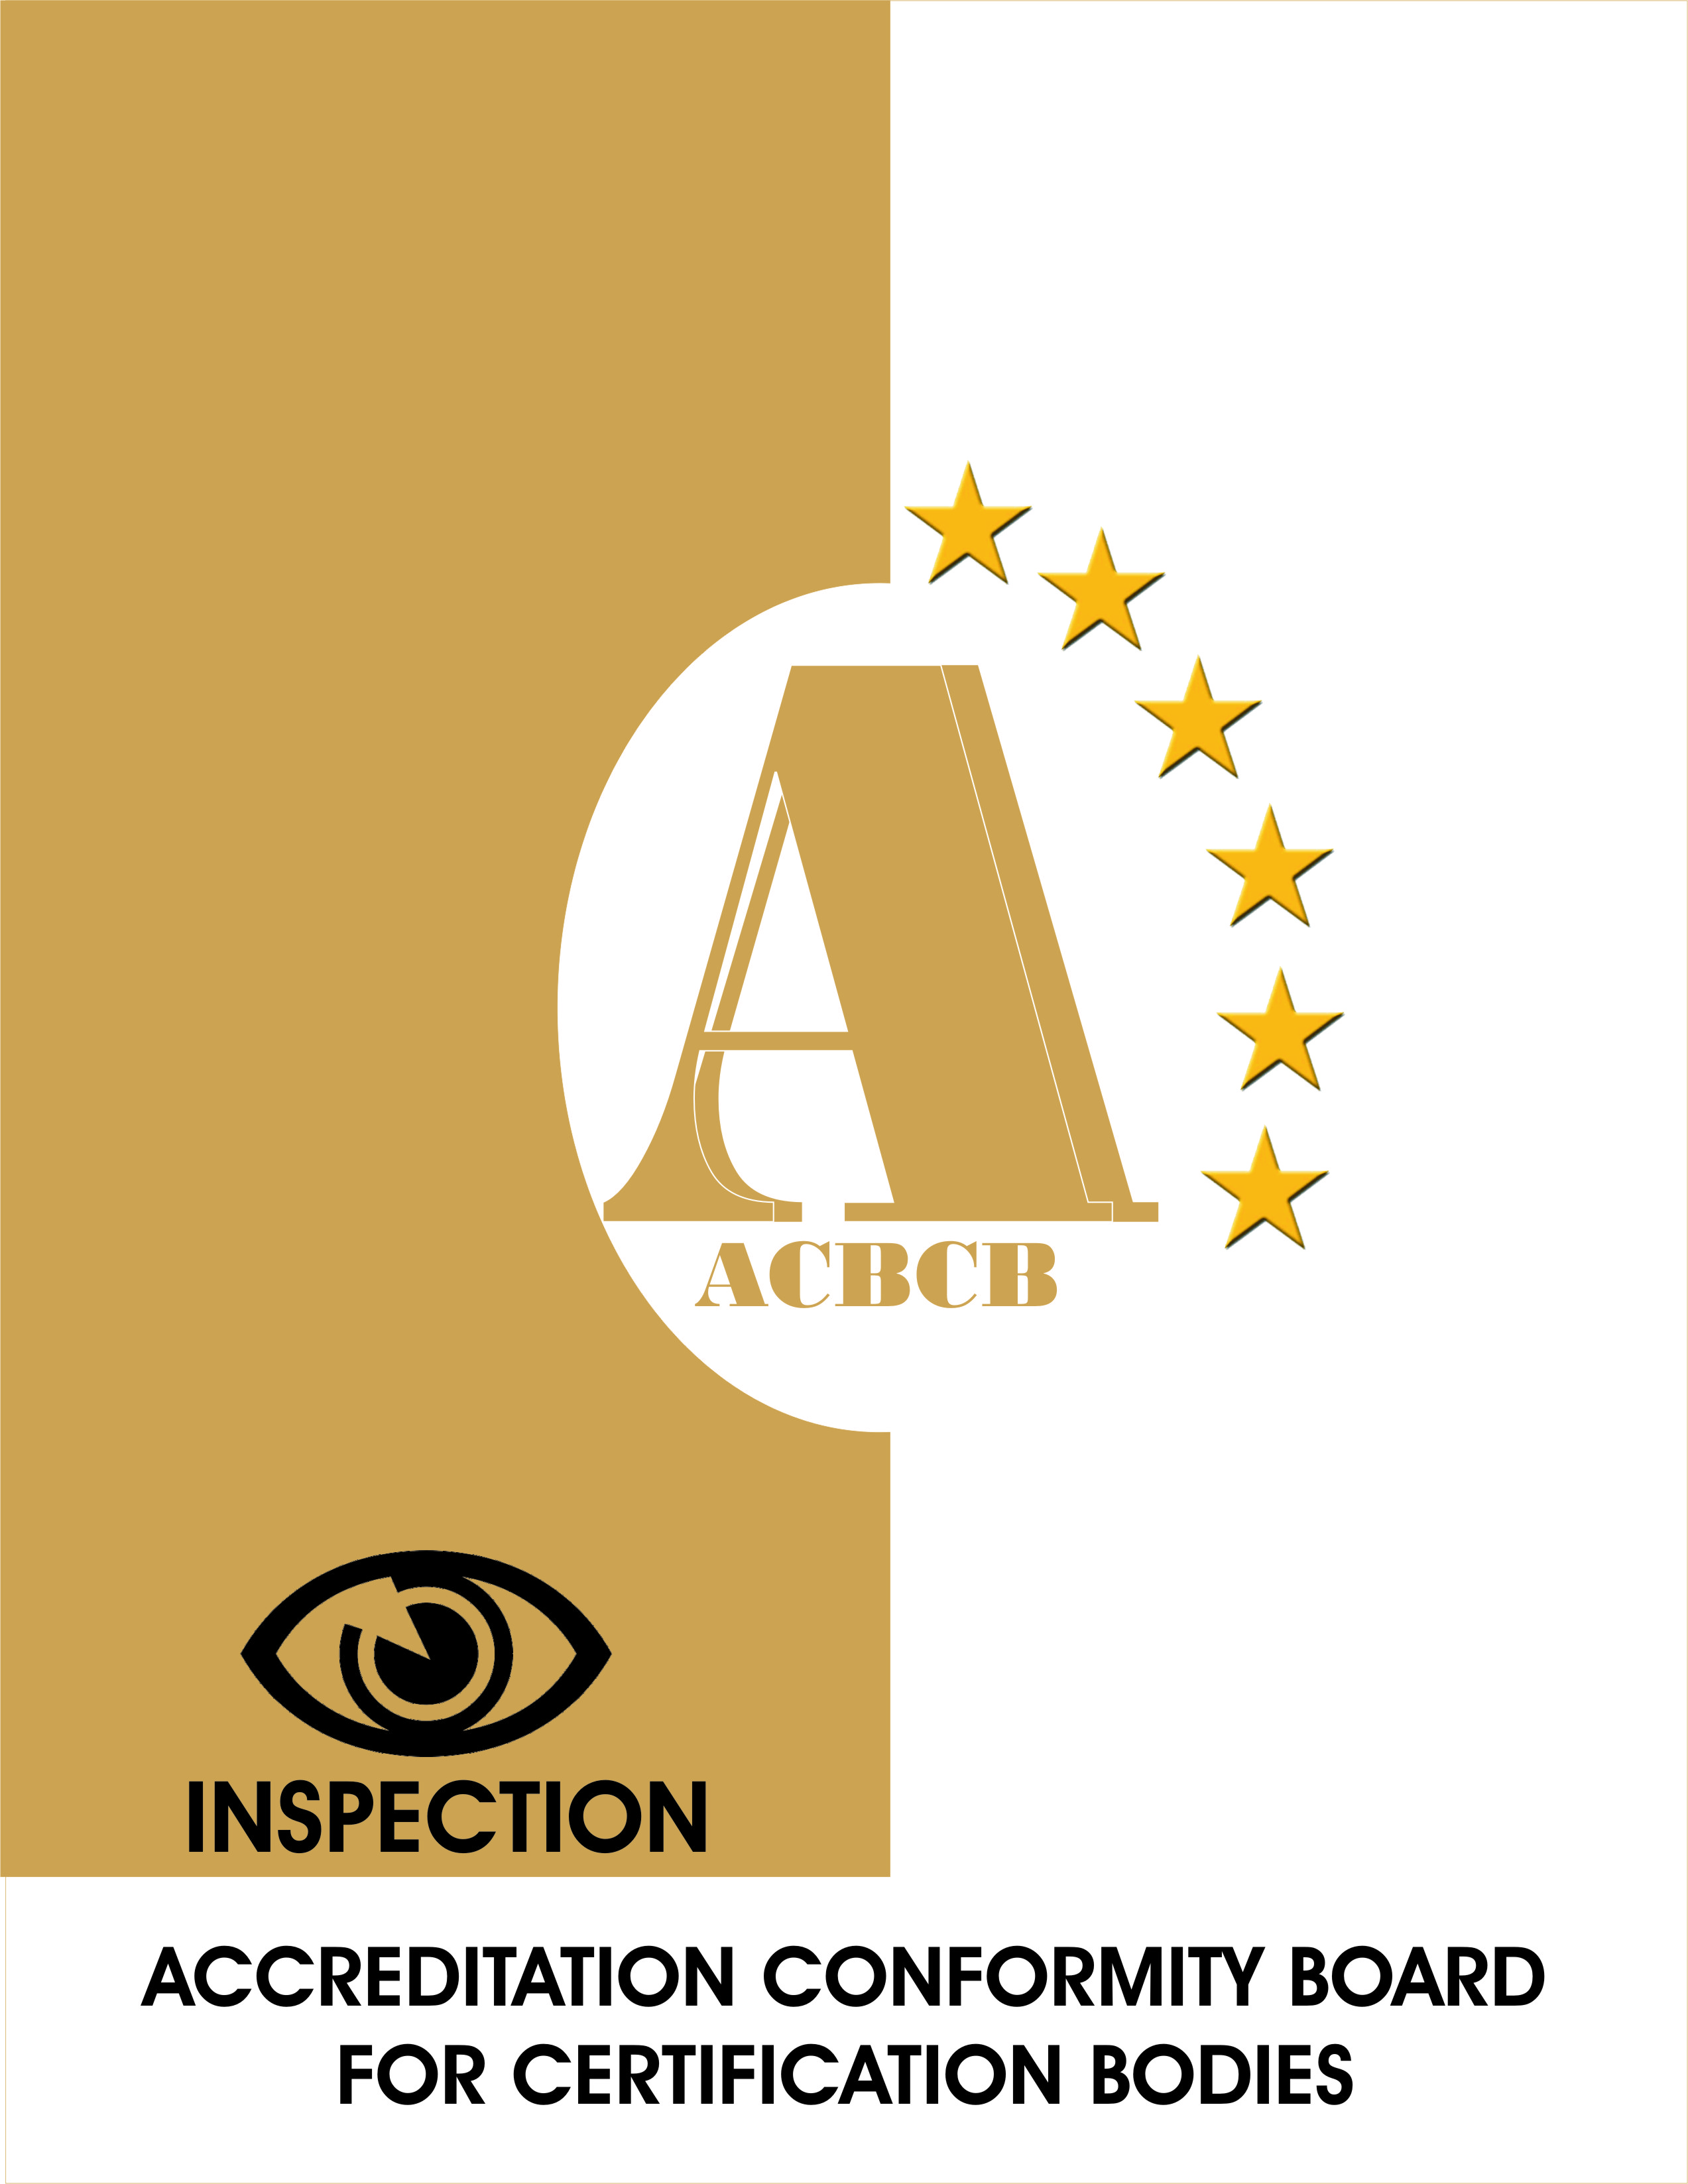 ACBCB INSPECTION